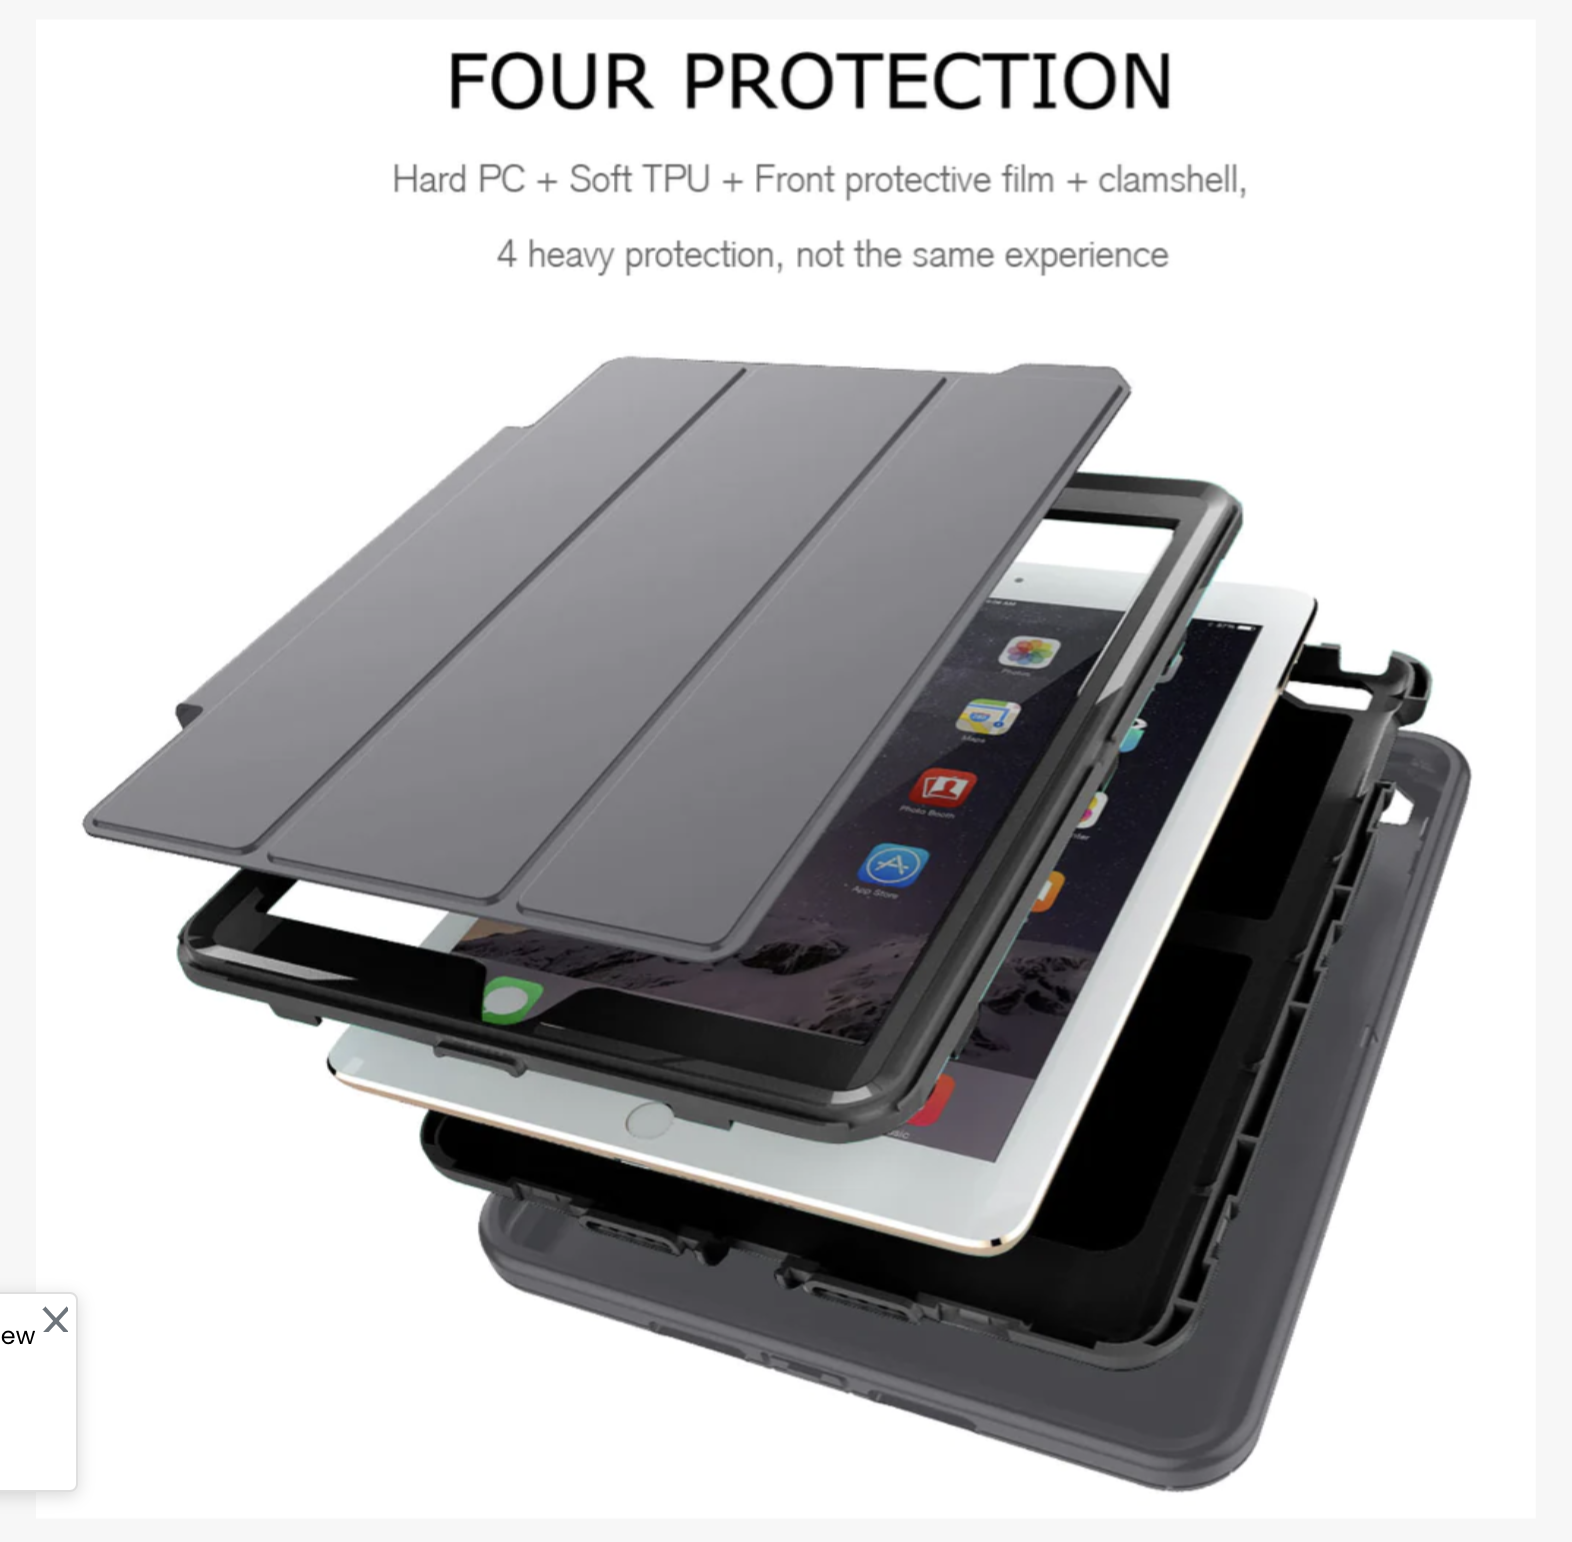 Shockproof Rugged Flip Case For iPad Pro 9.7 Black